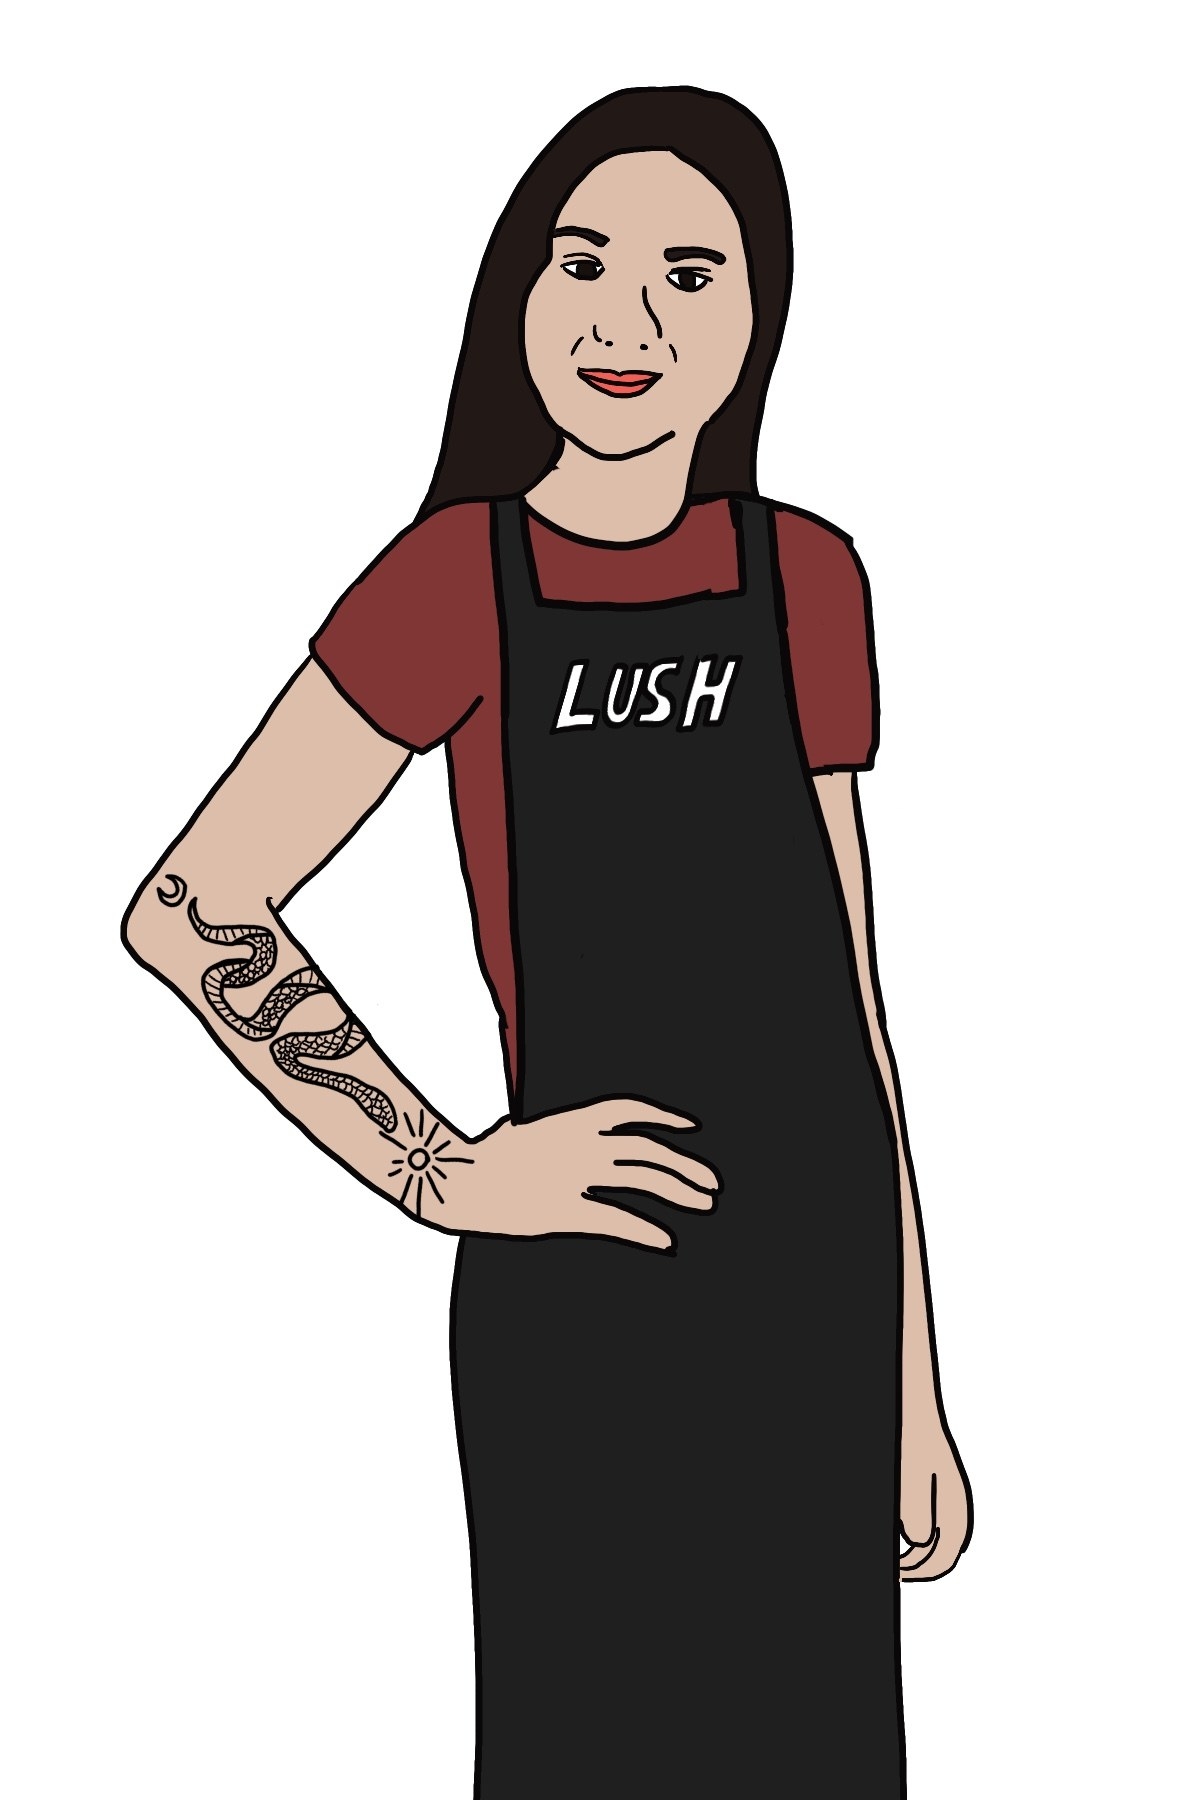 Lush employee with snake tattoo